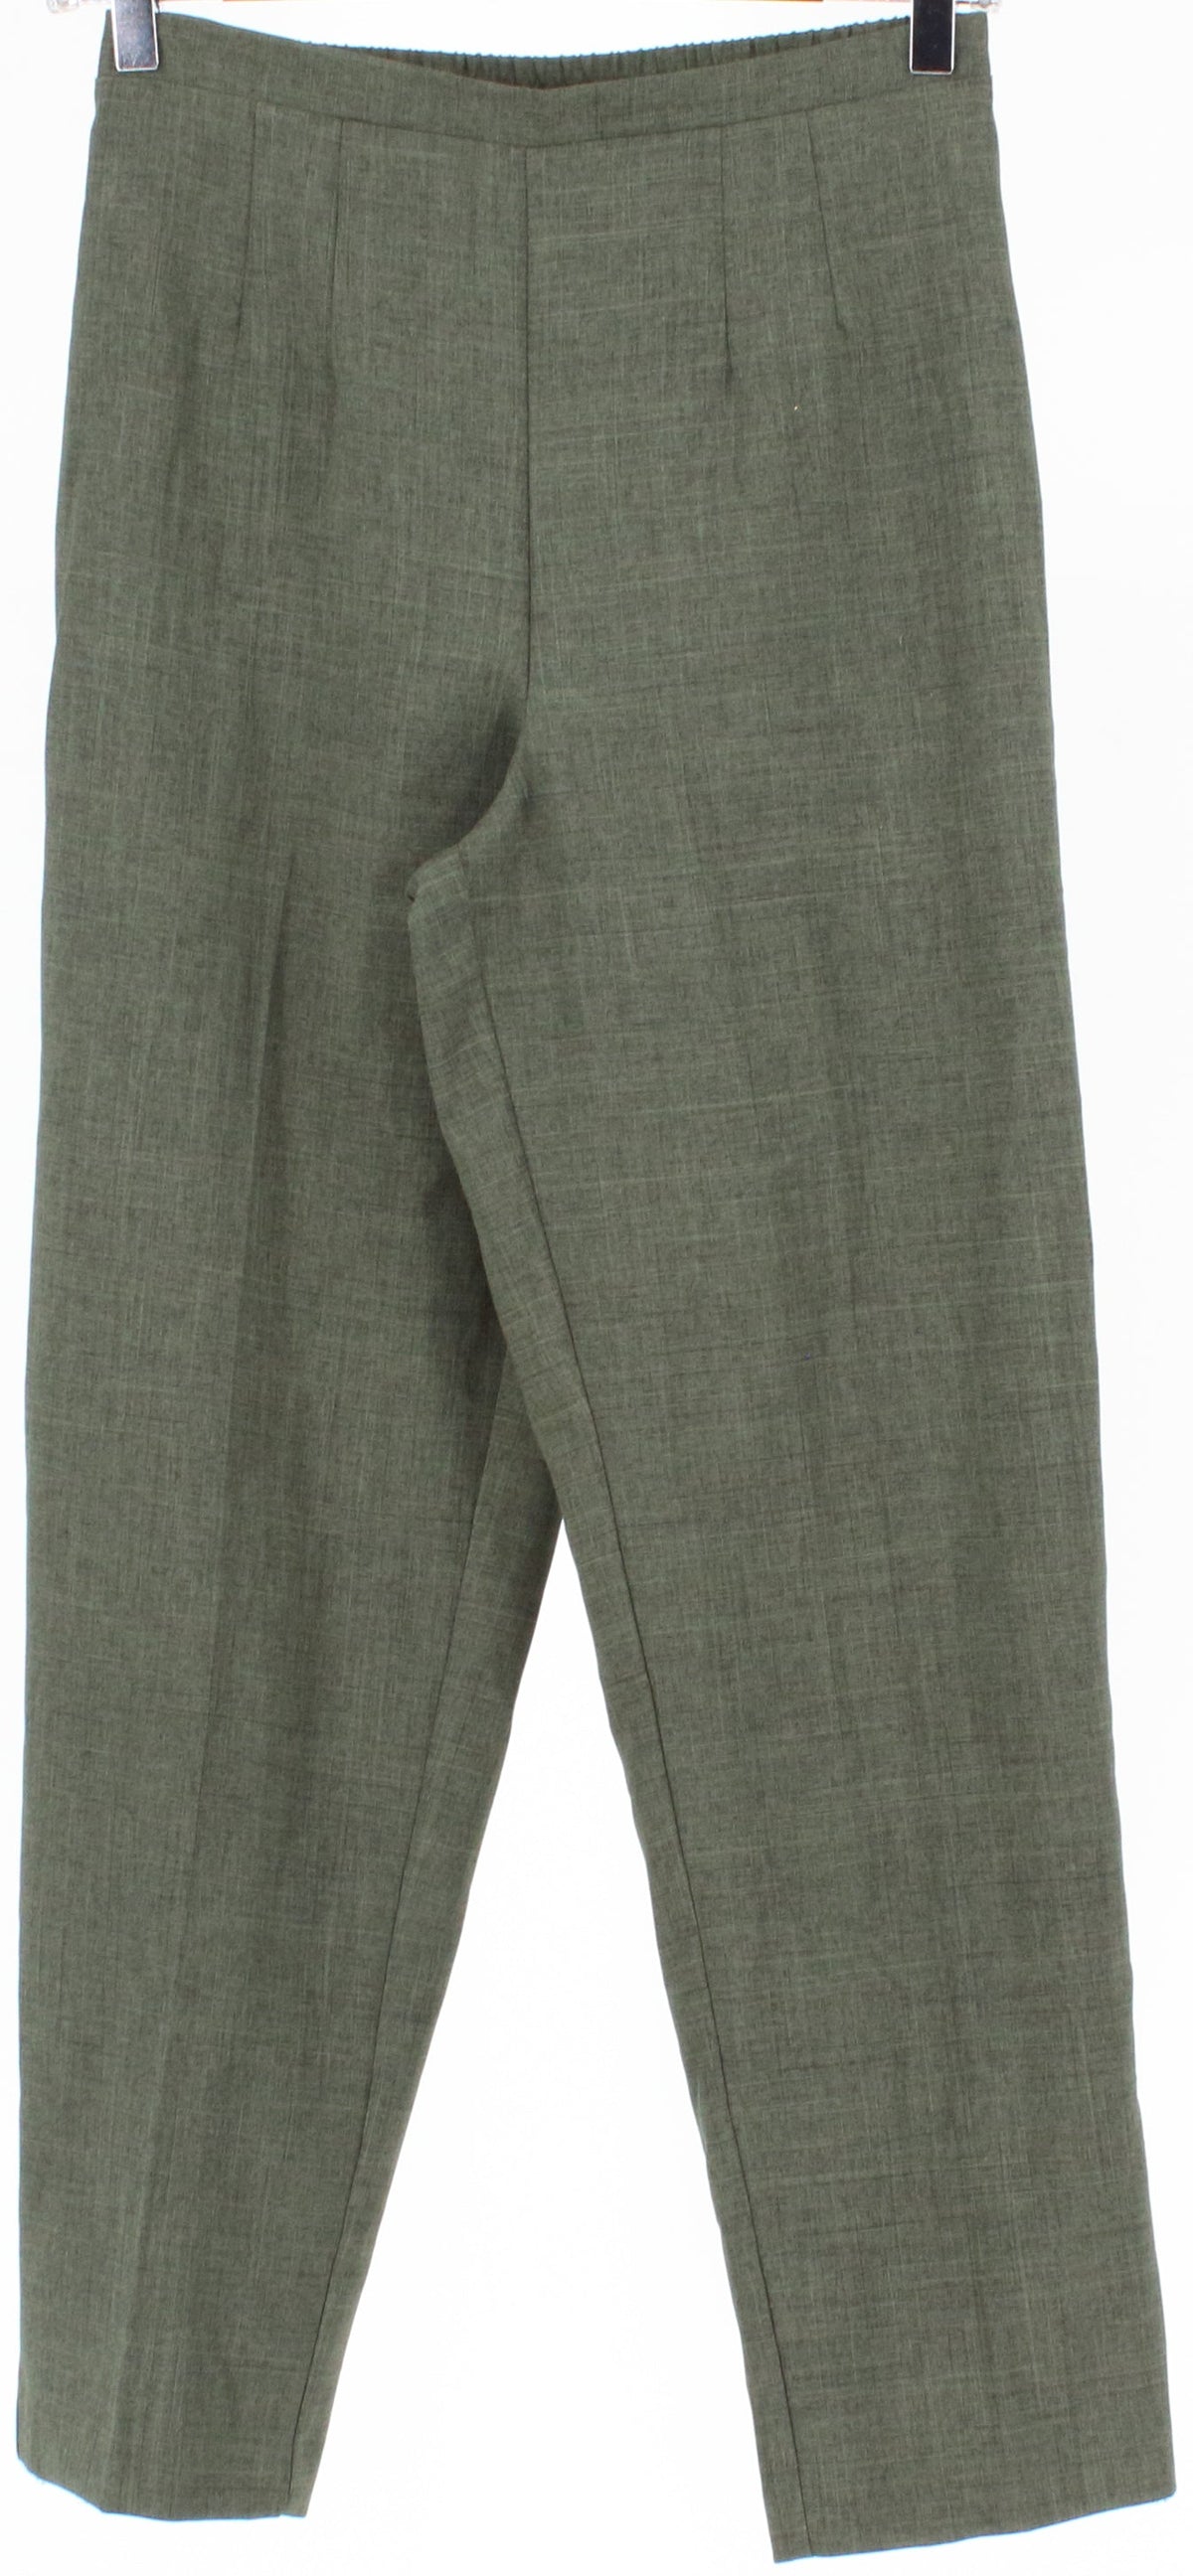 Green Basic Pants